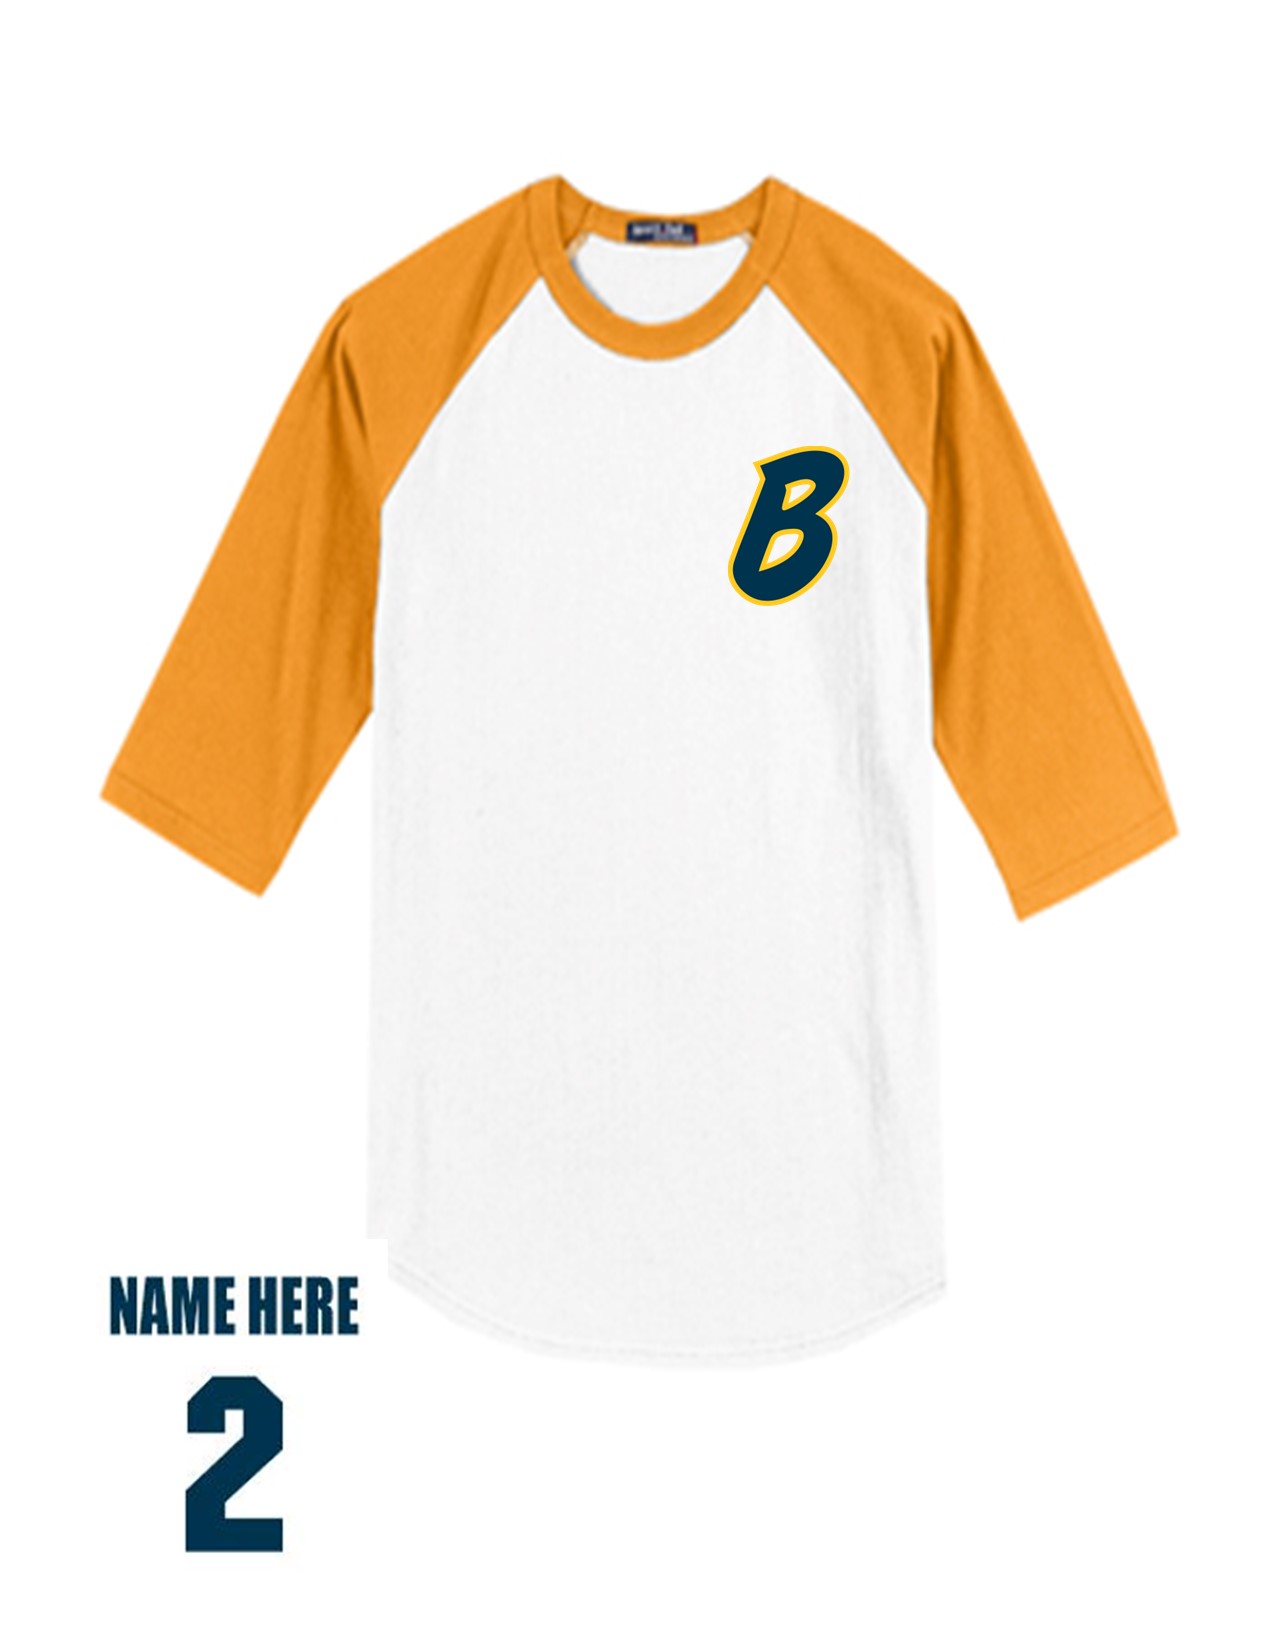 49b Sport-Tek T200 Adult Baseball 3/4 Raglan 100% Cotton Shirt with Bombers "B" LC Logo